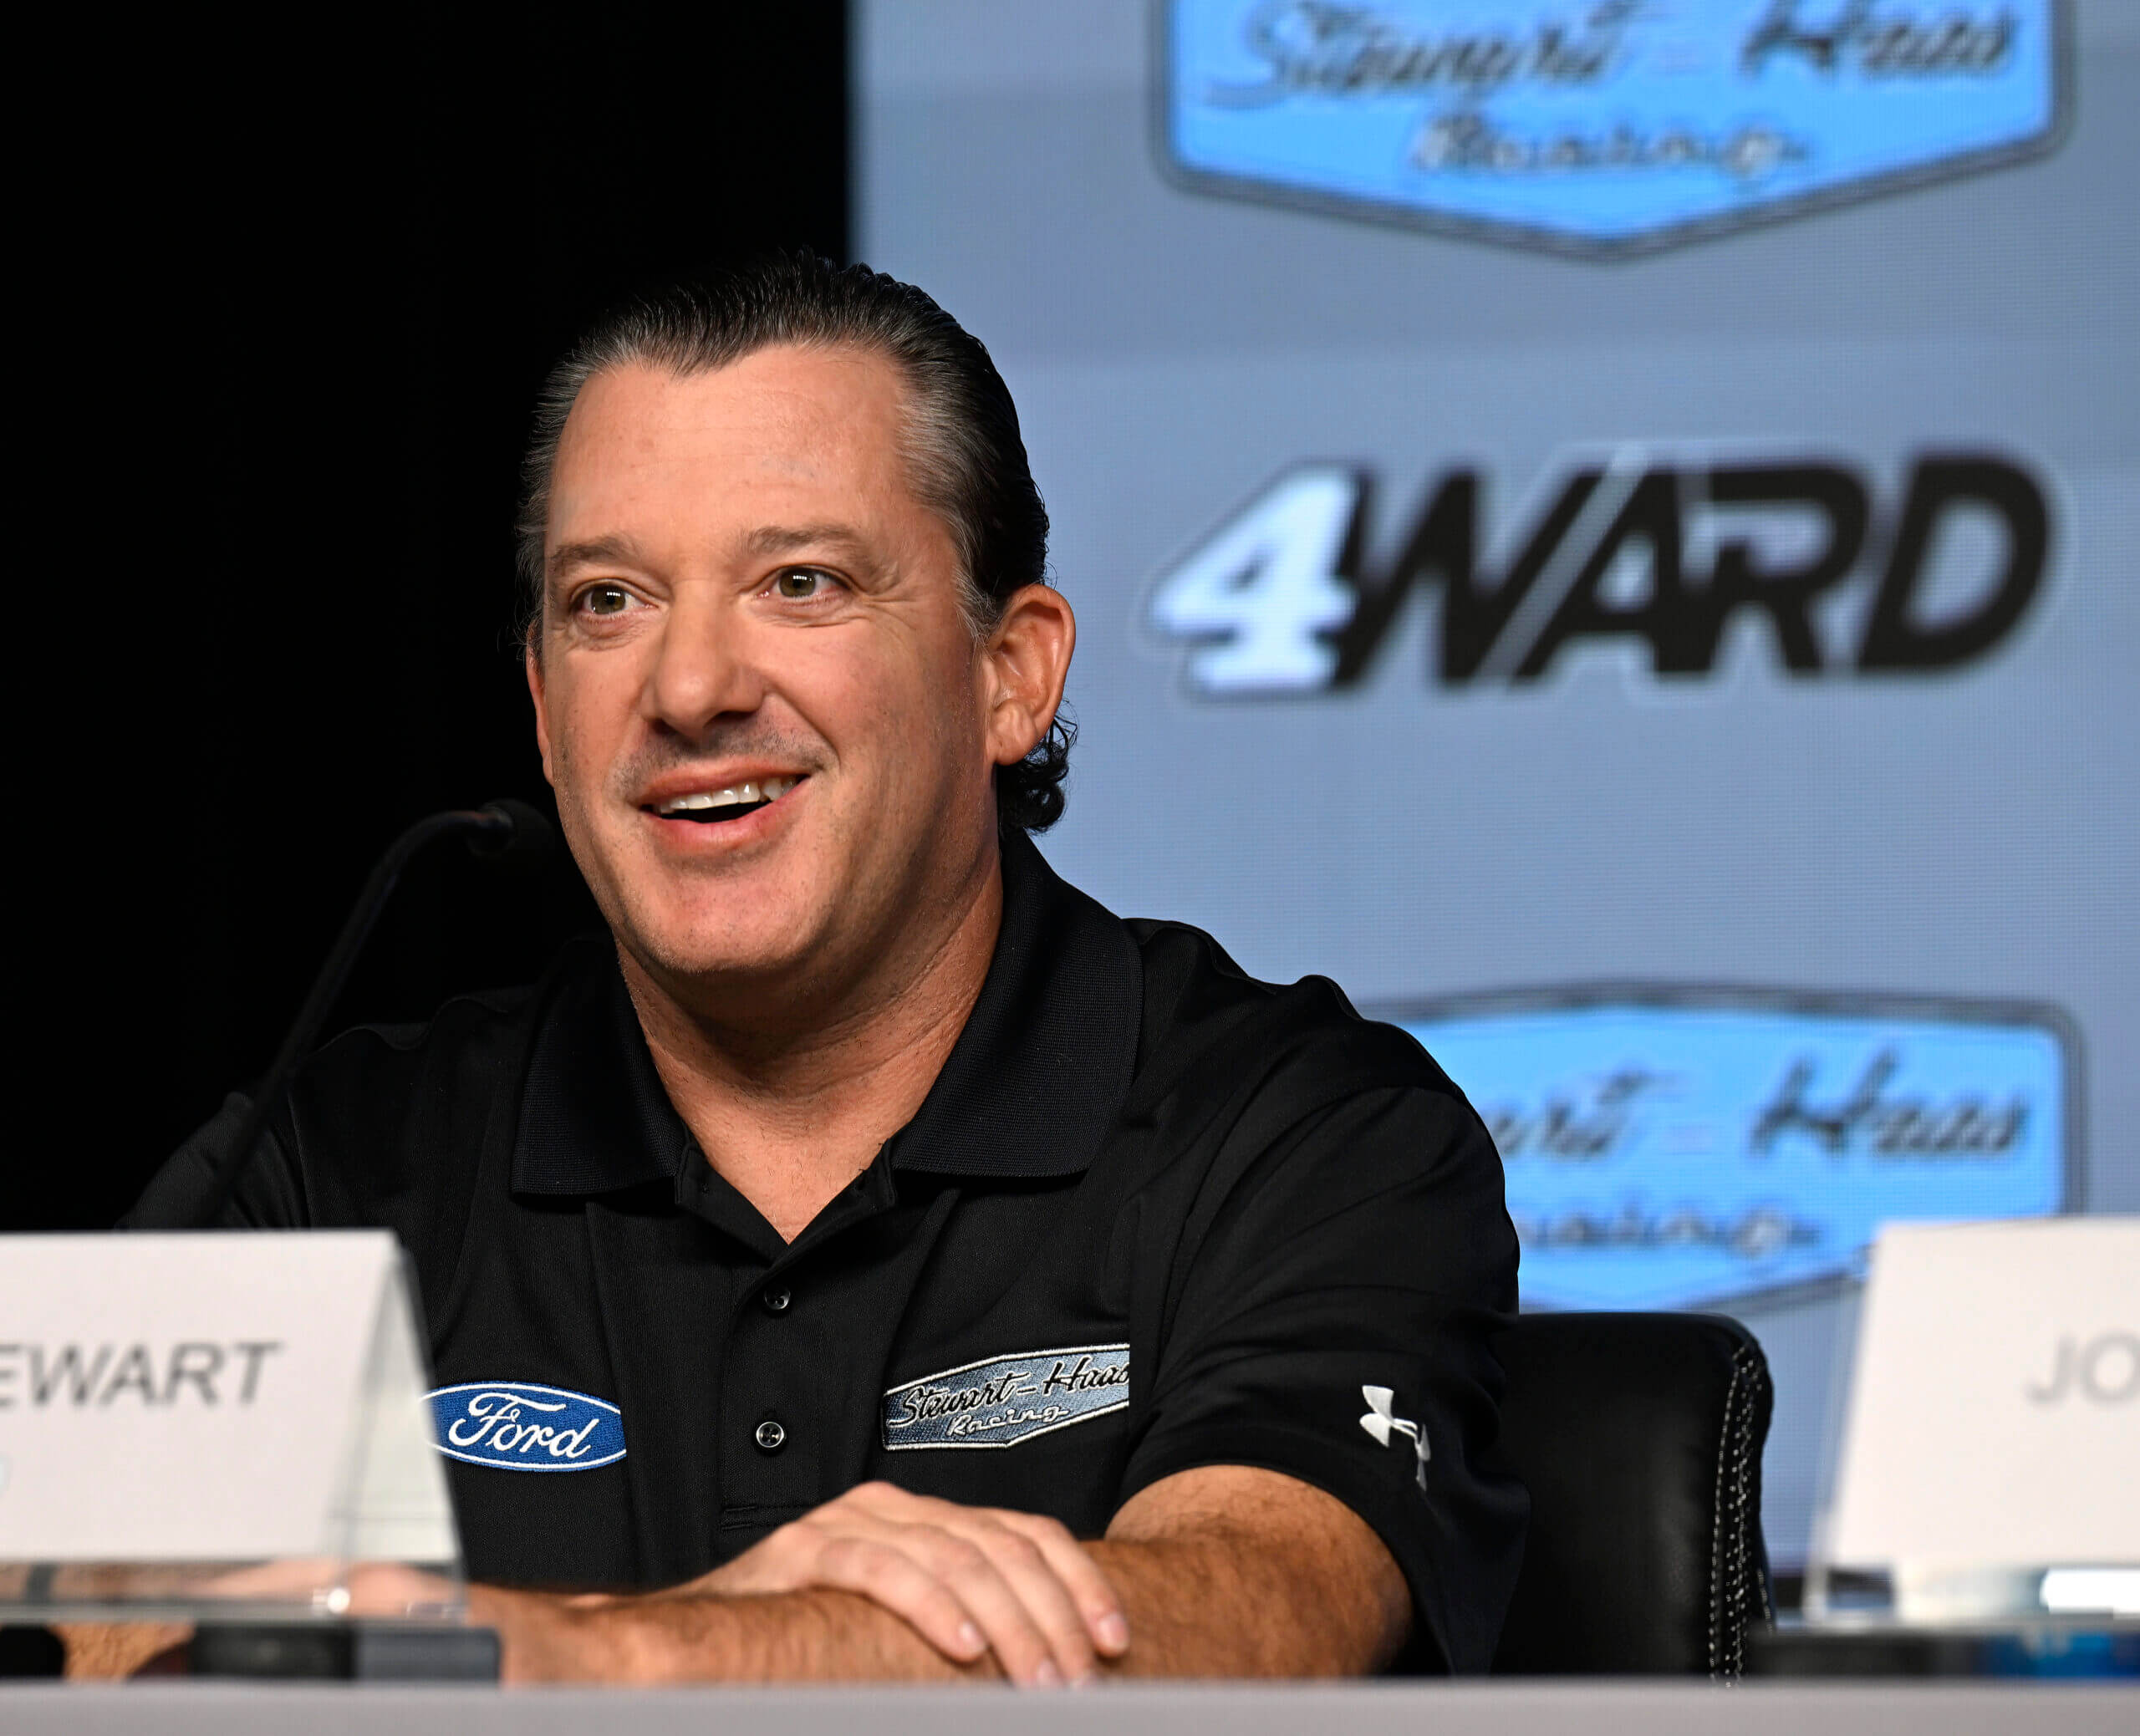 Stewart-Haas Racing to shut down at end of season